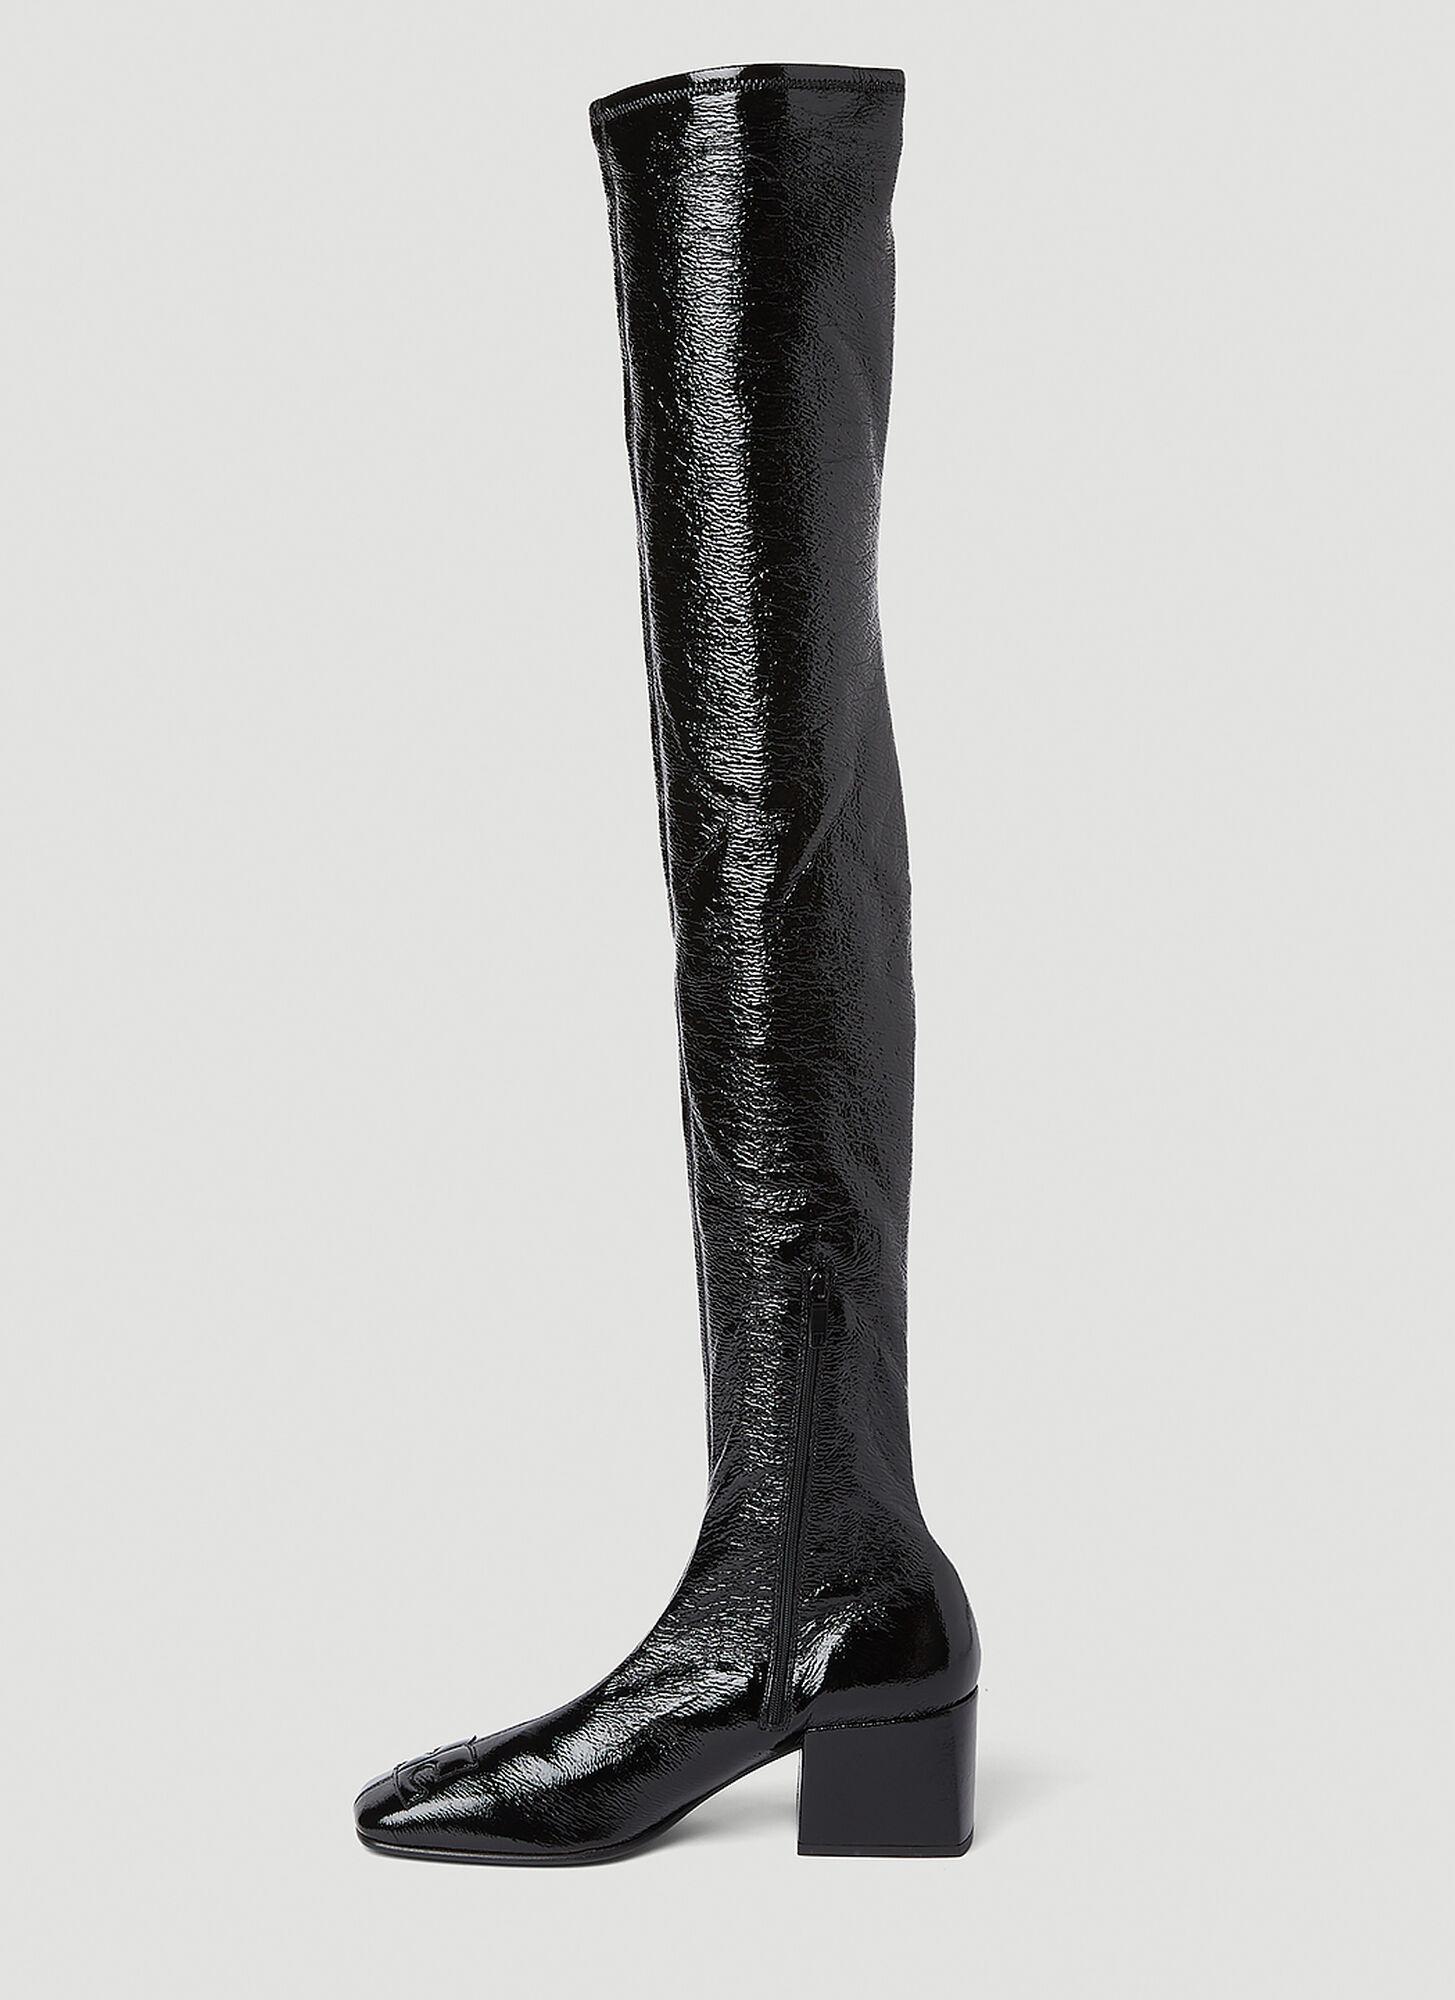 Courreges Vinyl Knee High Boots in Black | Lyst